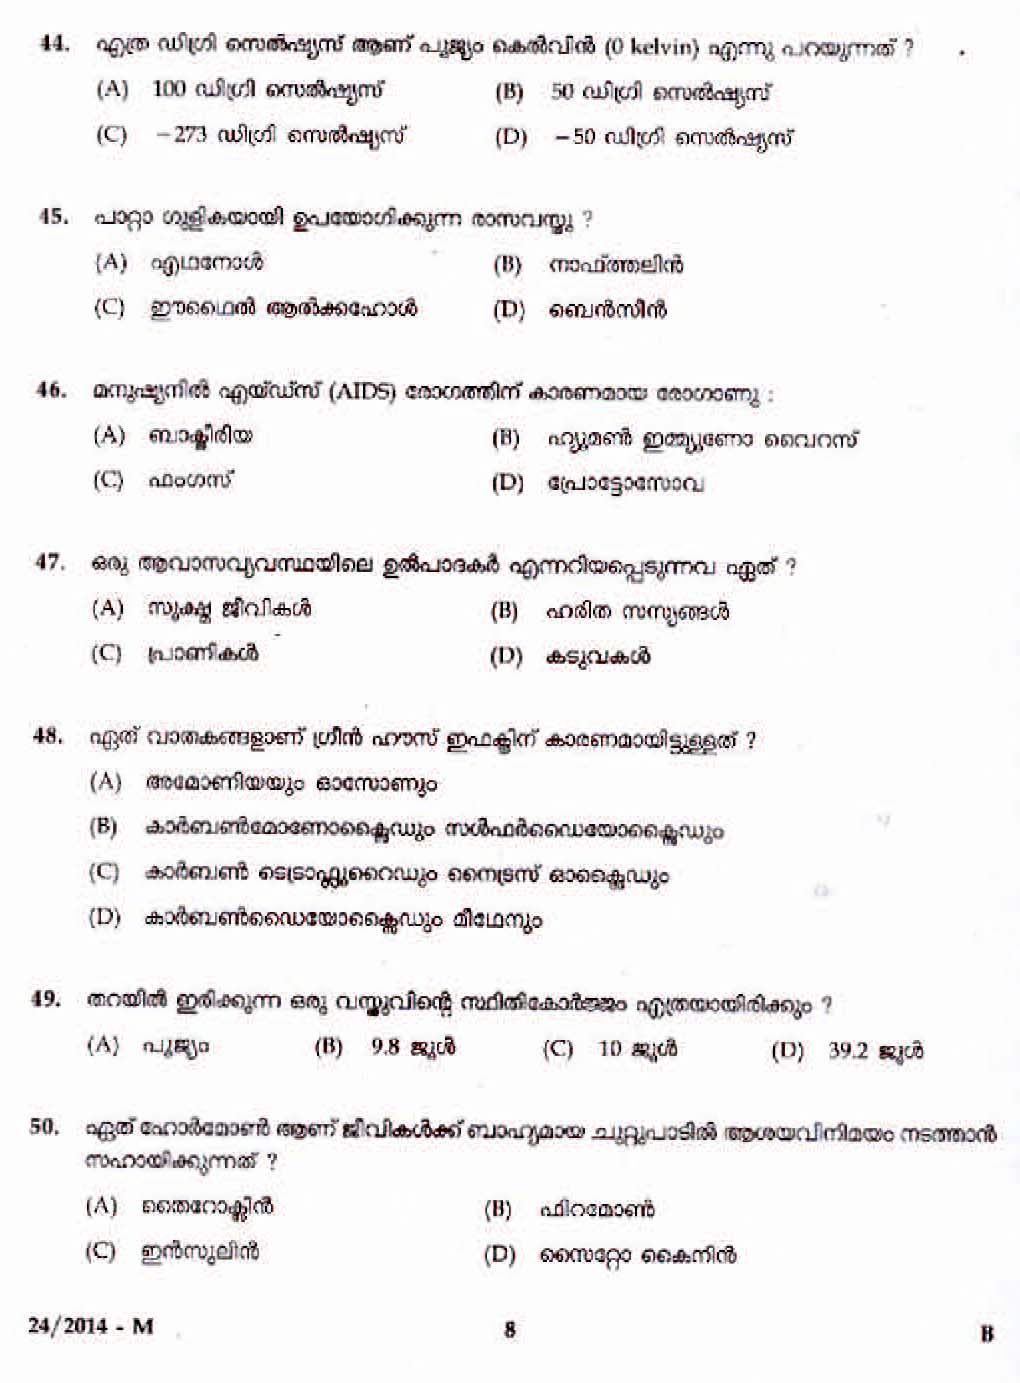 LD Clerk Malappuram Question Paper Malayalam 2014 Paper Code 242014 M 4